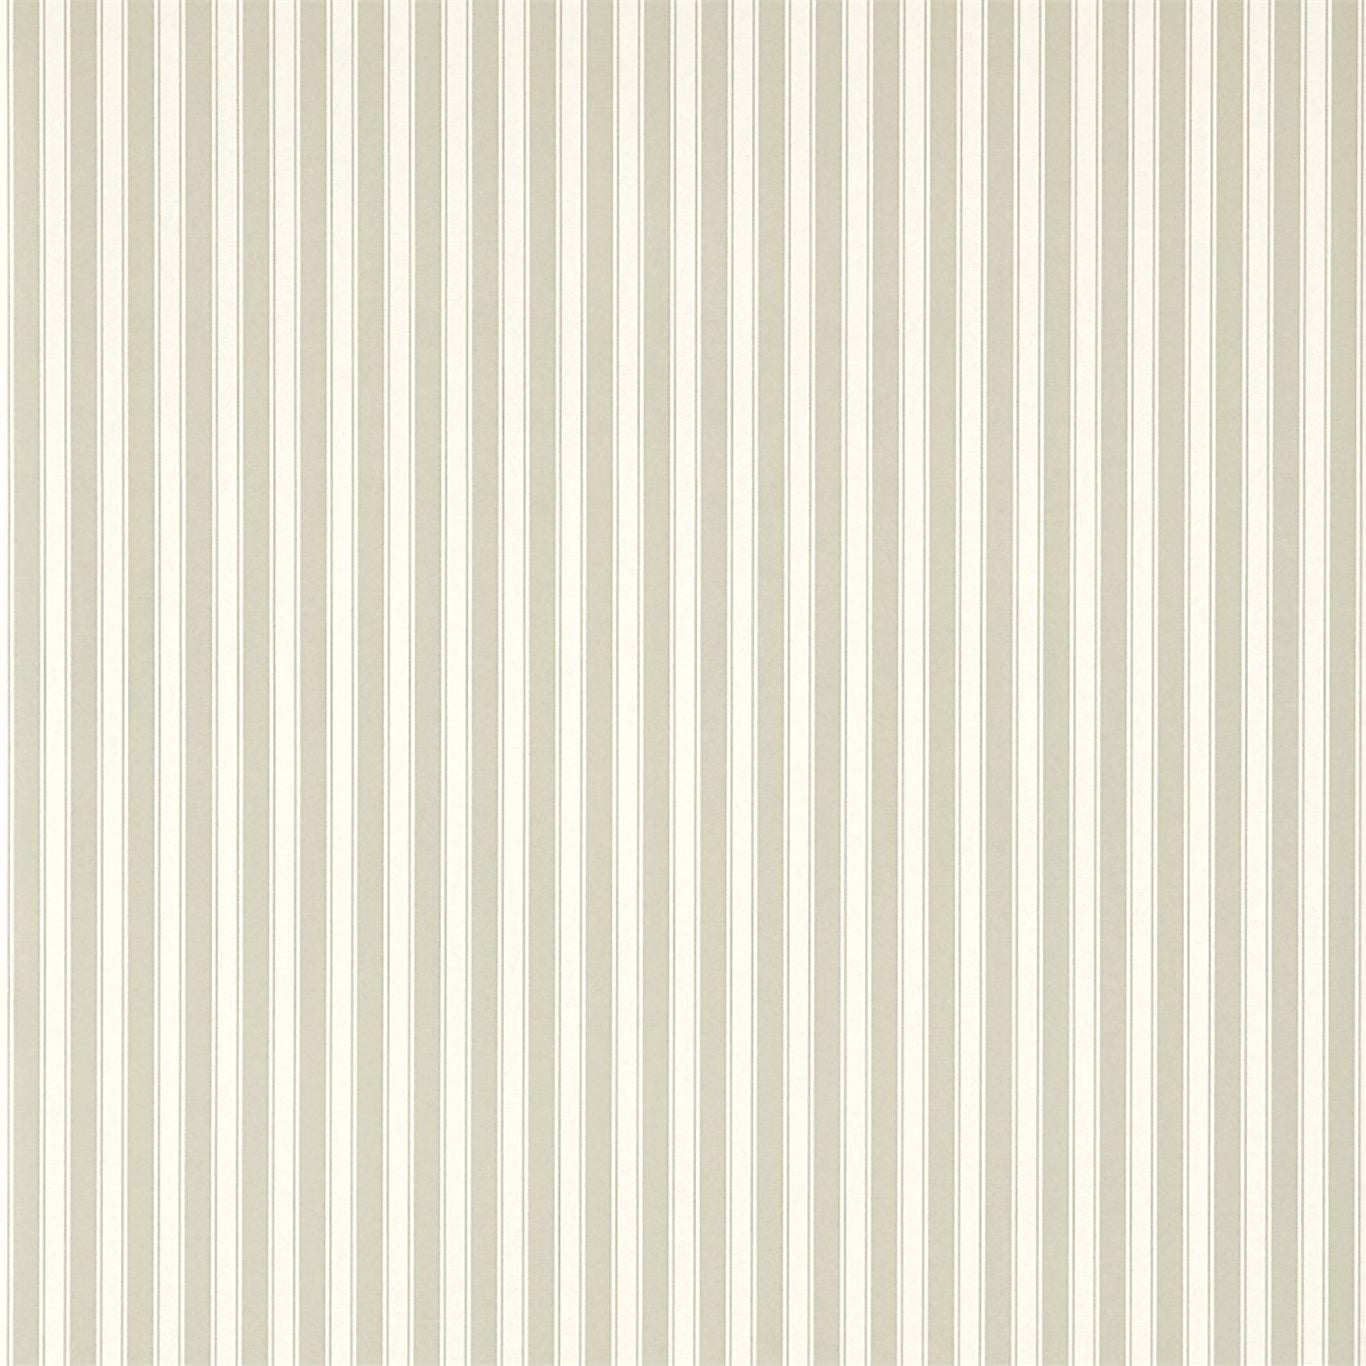 New Tiger Stripe Wallpaper - Gray